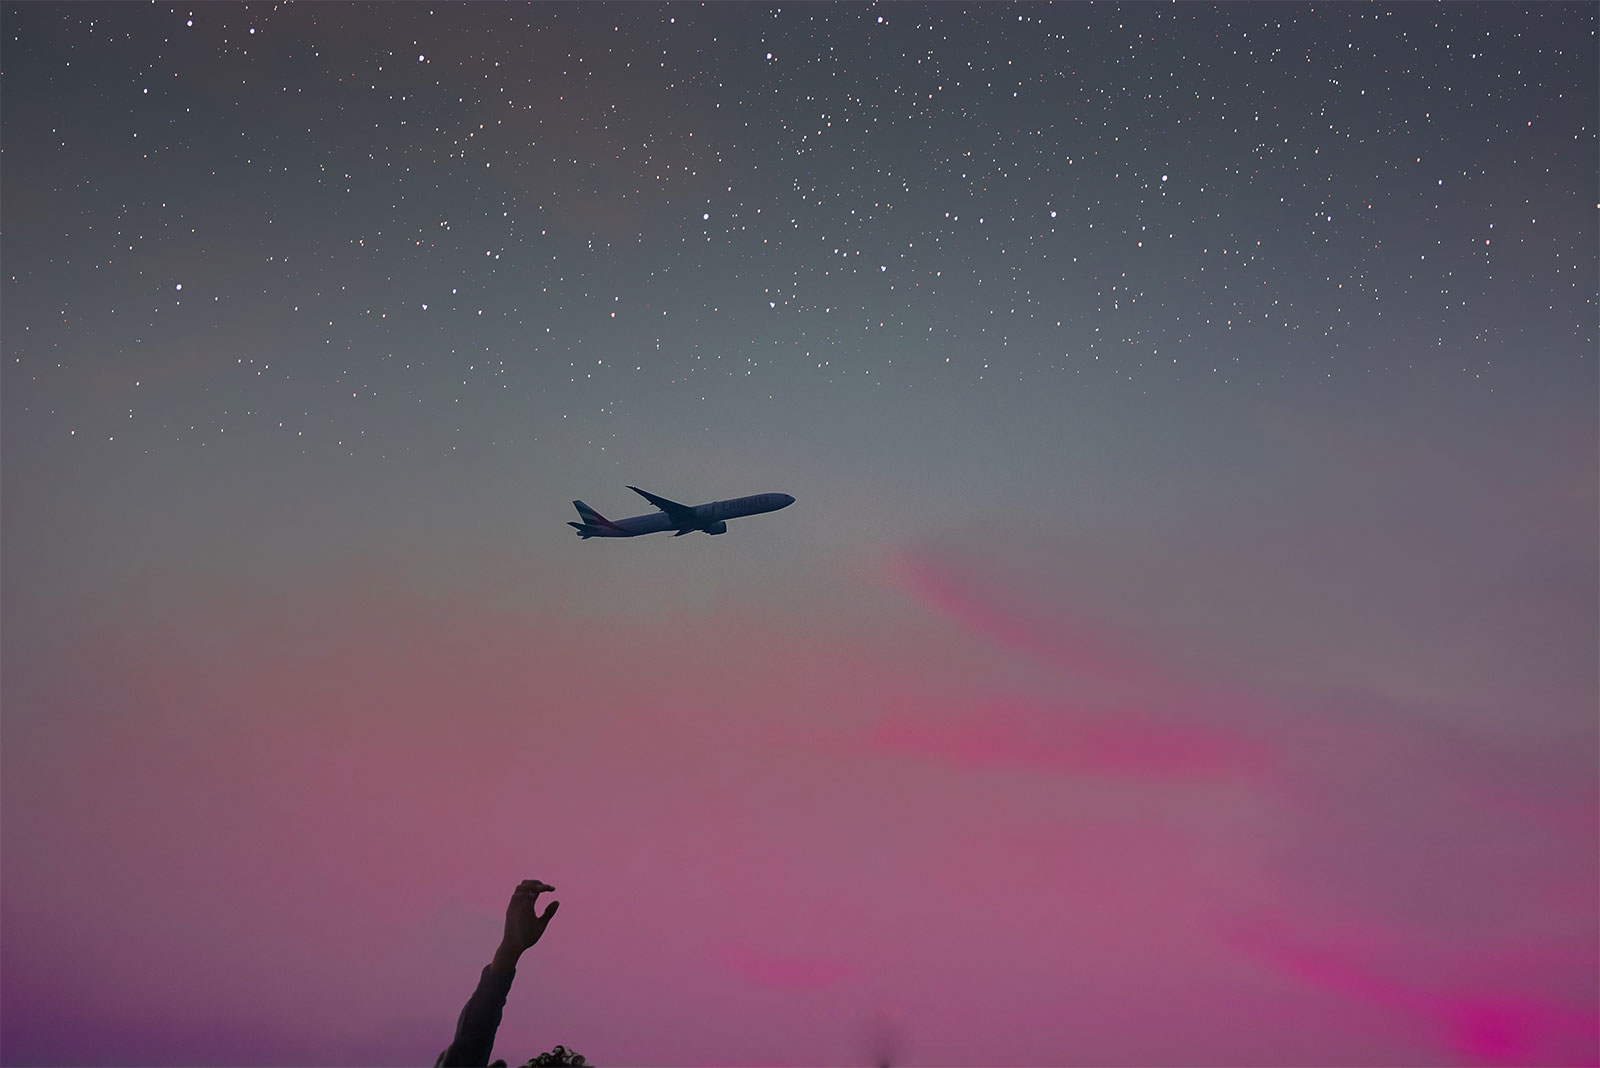 Hand reaching toward airplane seen high in the night sky.